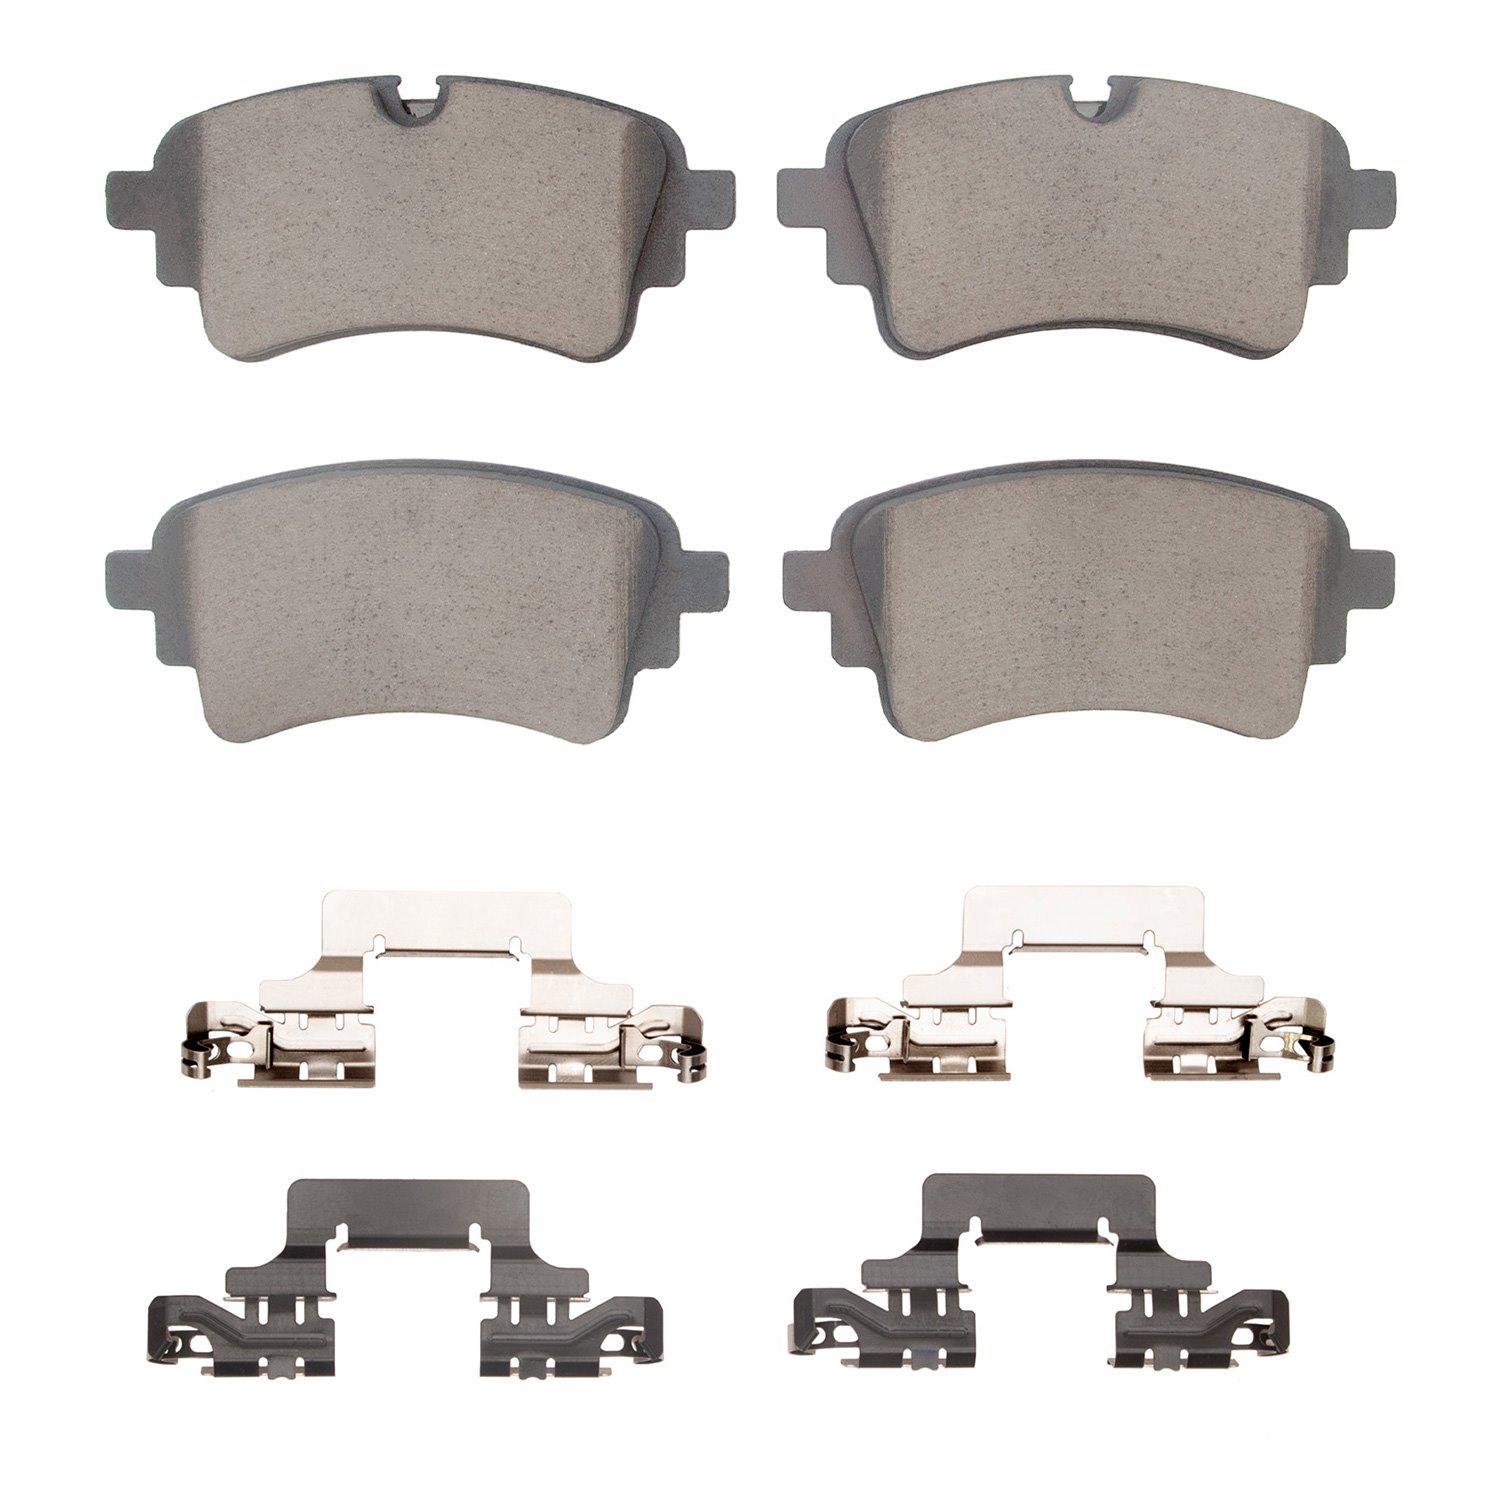 1310-2364-01 3000-Series Ceramic Brake Pads & Hardware Kit, Fits Select Audi/Volkswagen, Position: Rear